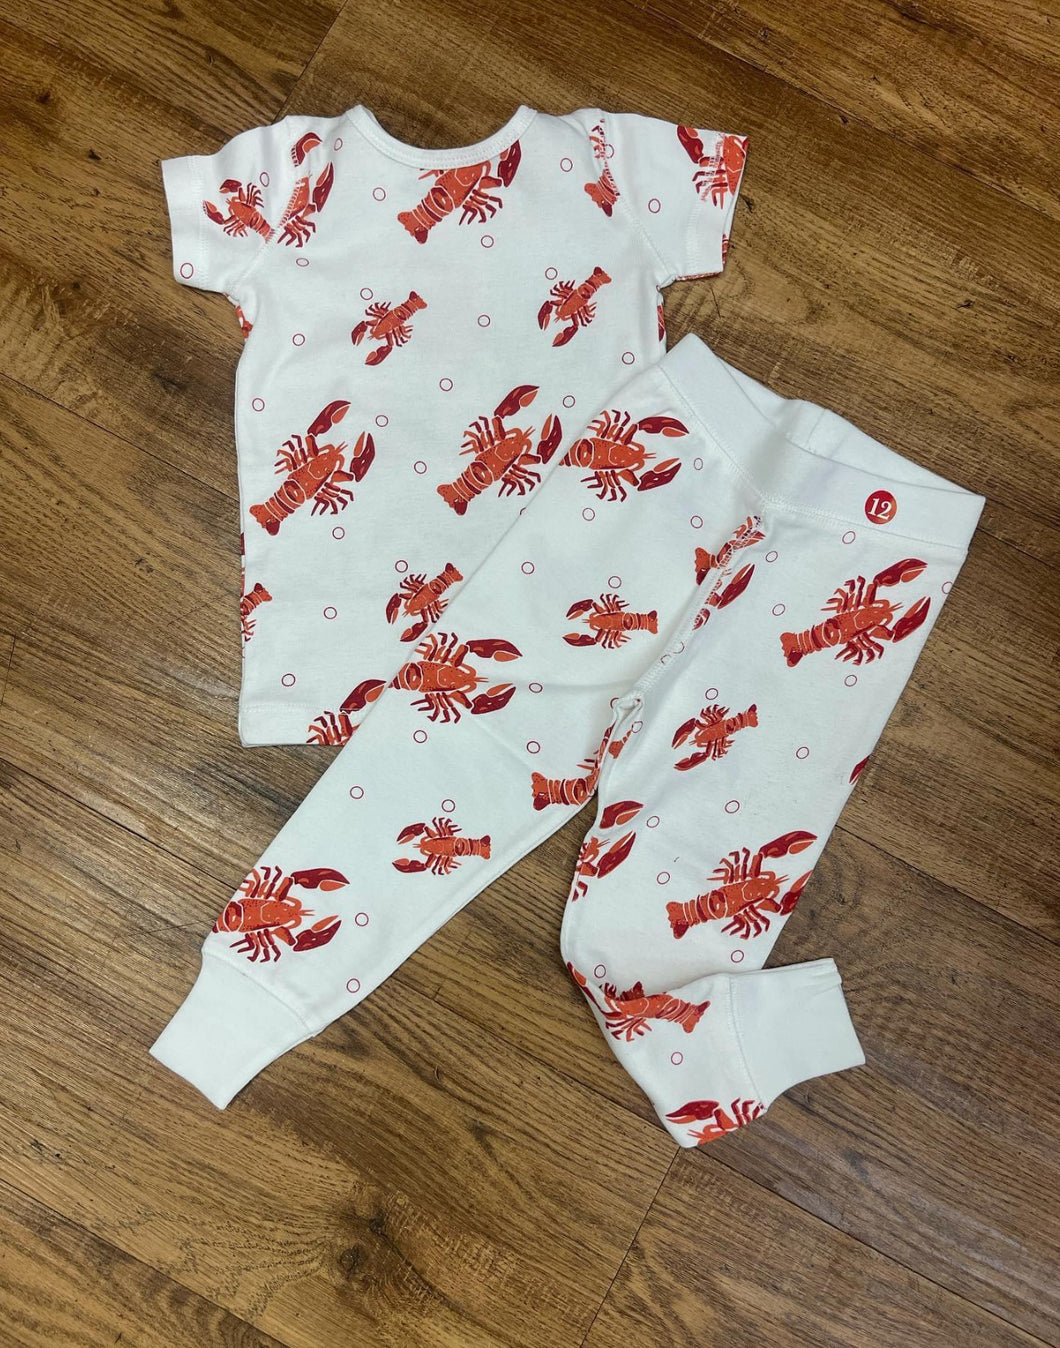 Crawfish Tails Kids Pajamas